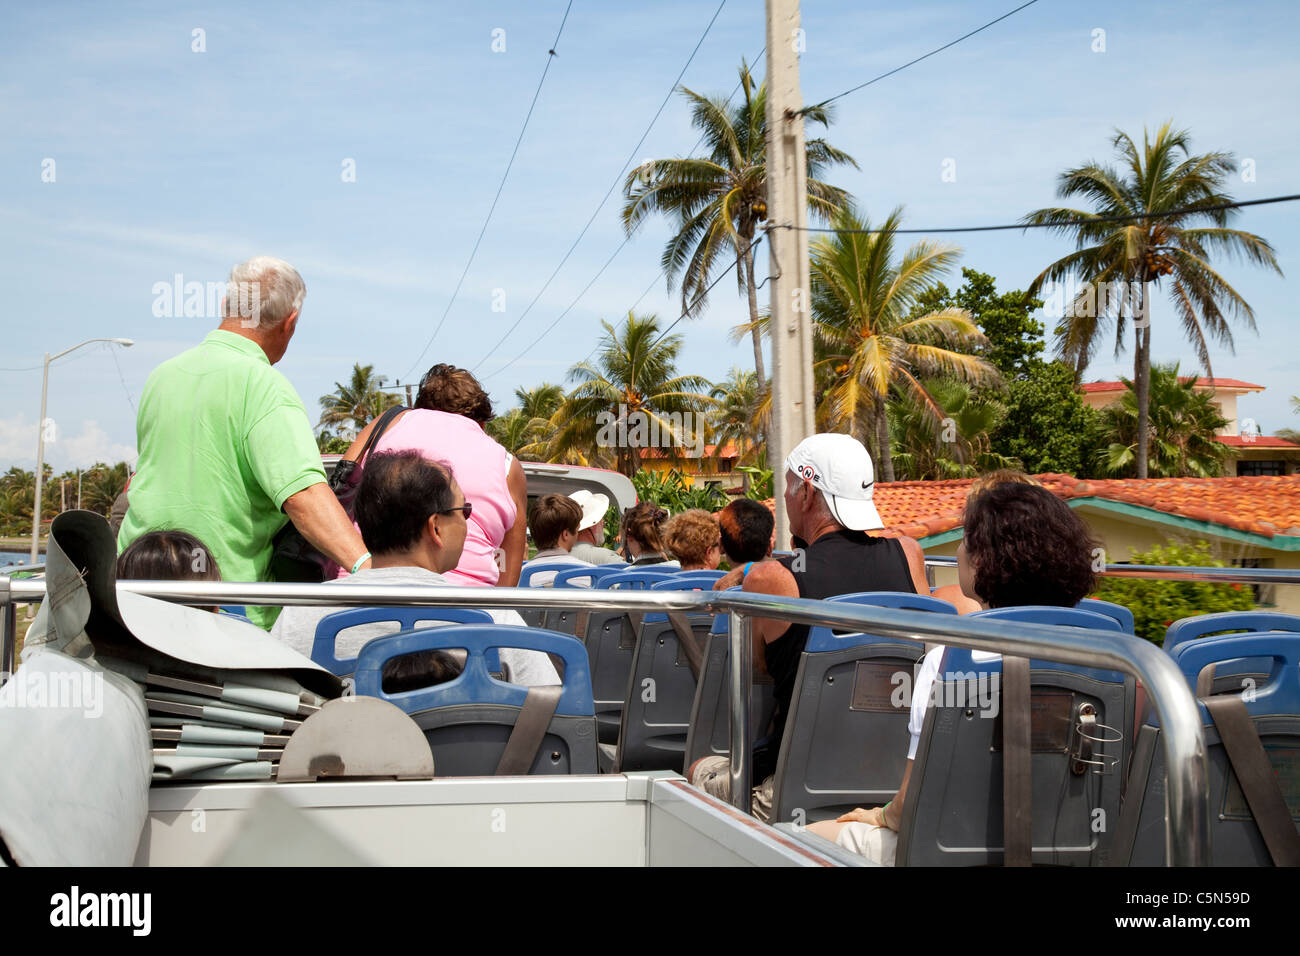 Onboard an open top tourist bus in Cuba Stock Photo